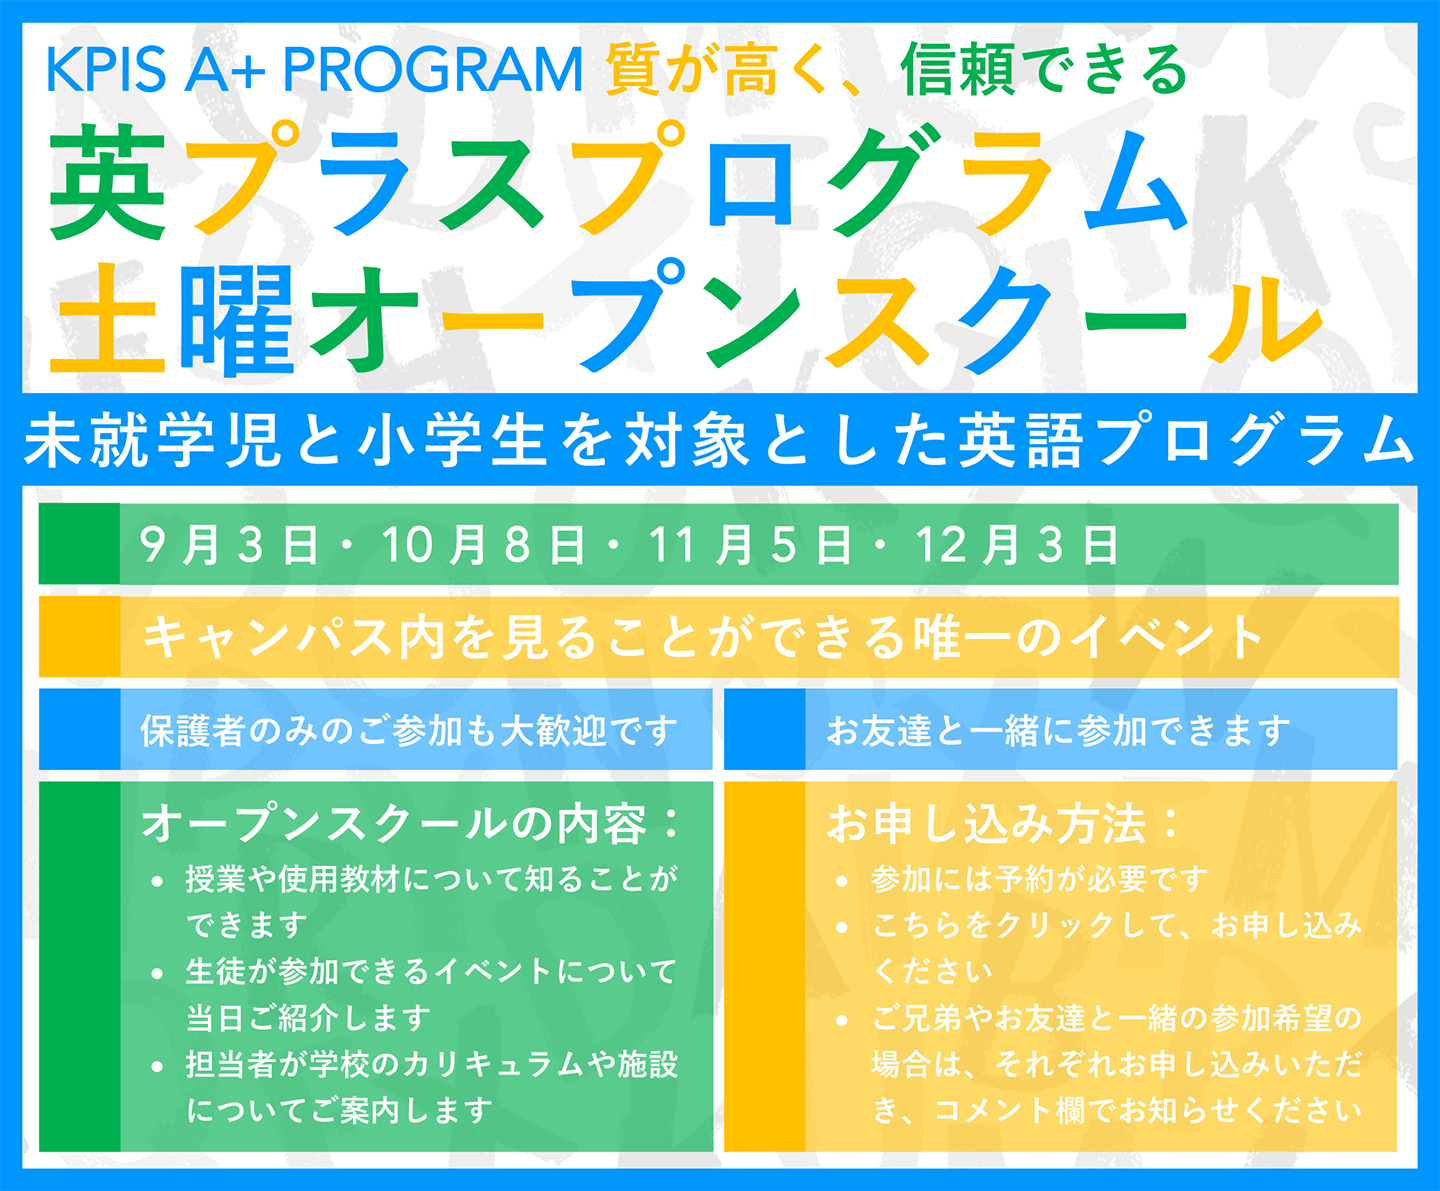 Komazawa park international school | A+Program